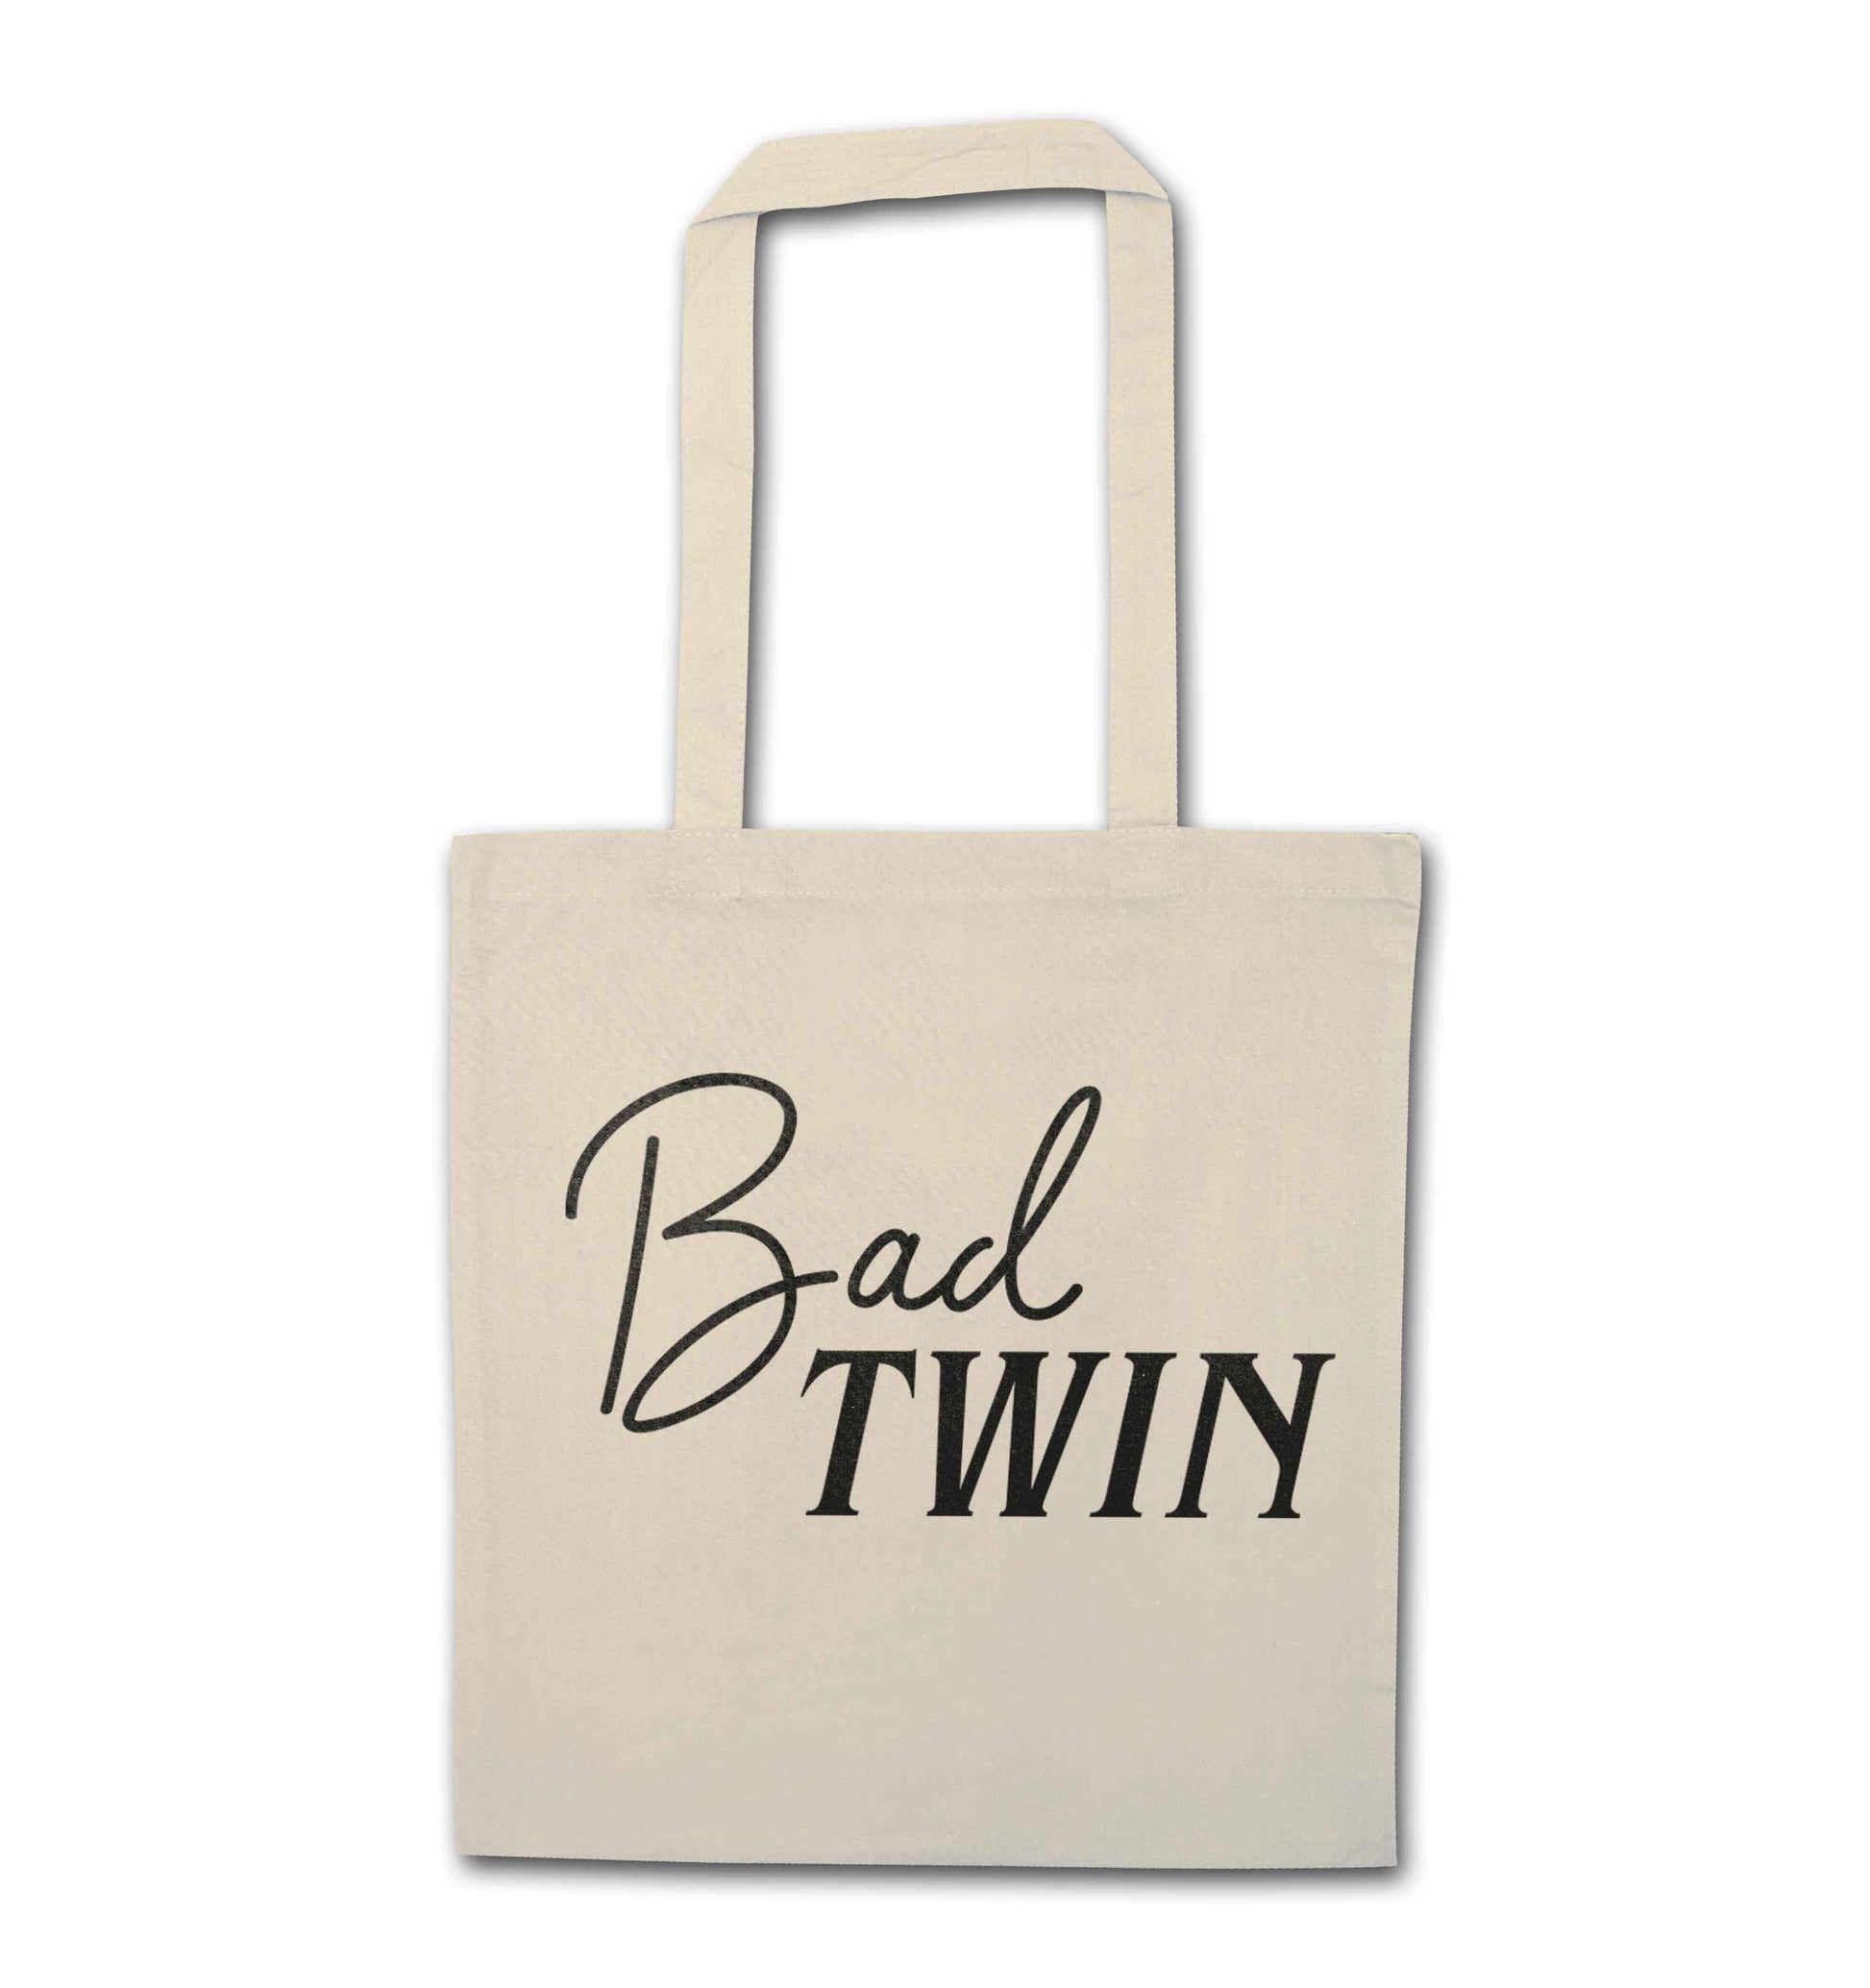 Bad twin natural tote bag